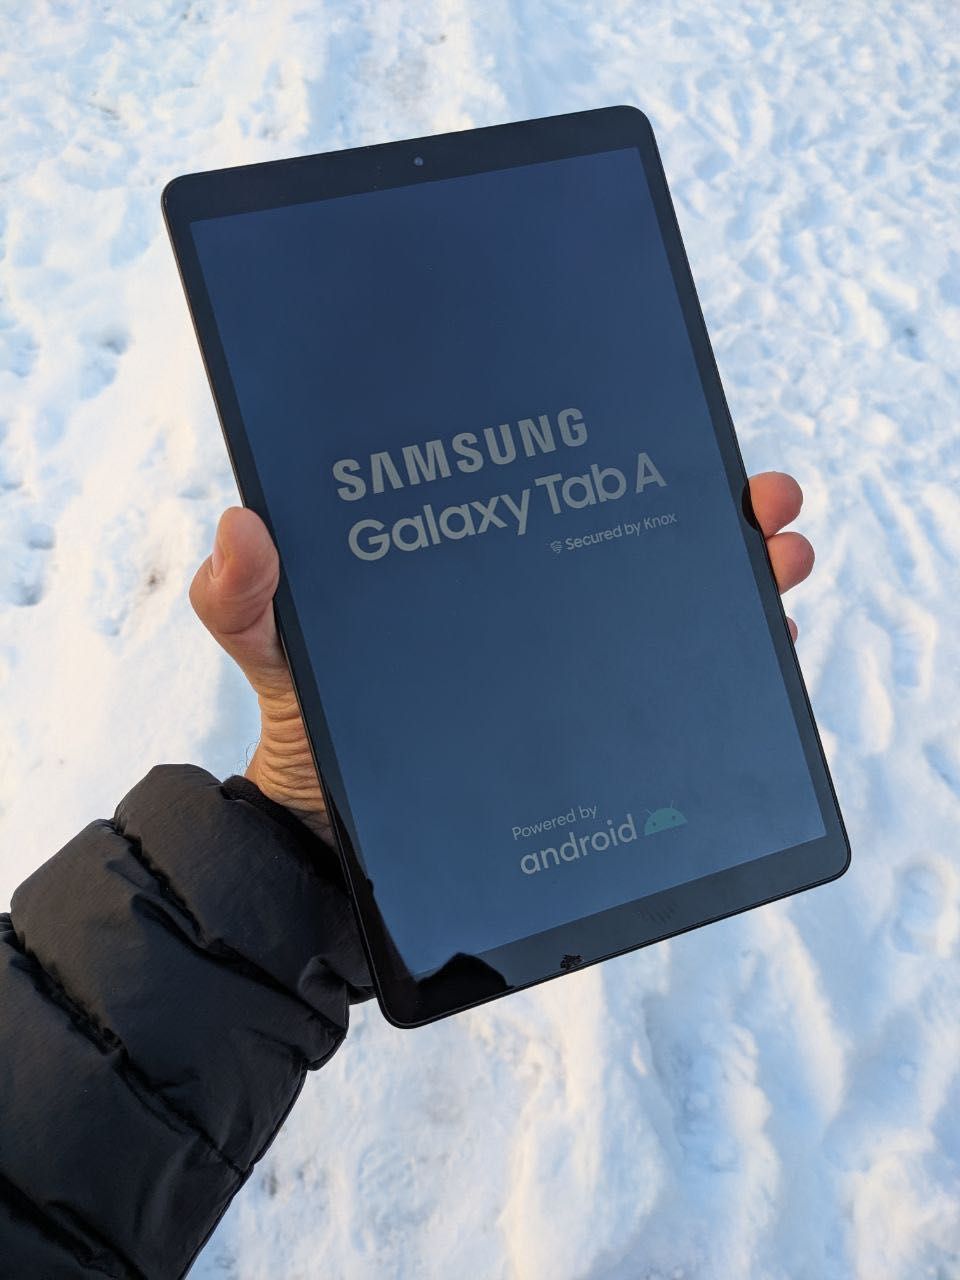 Samsung tab a lte